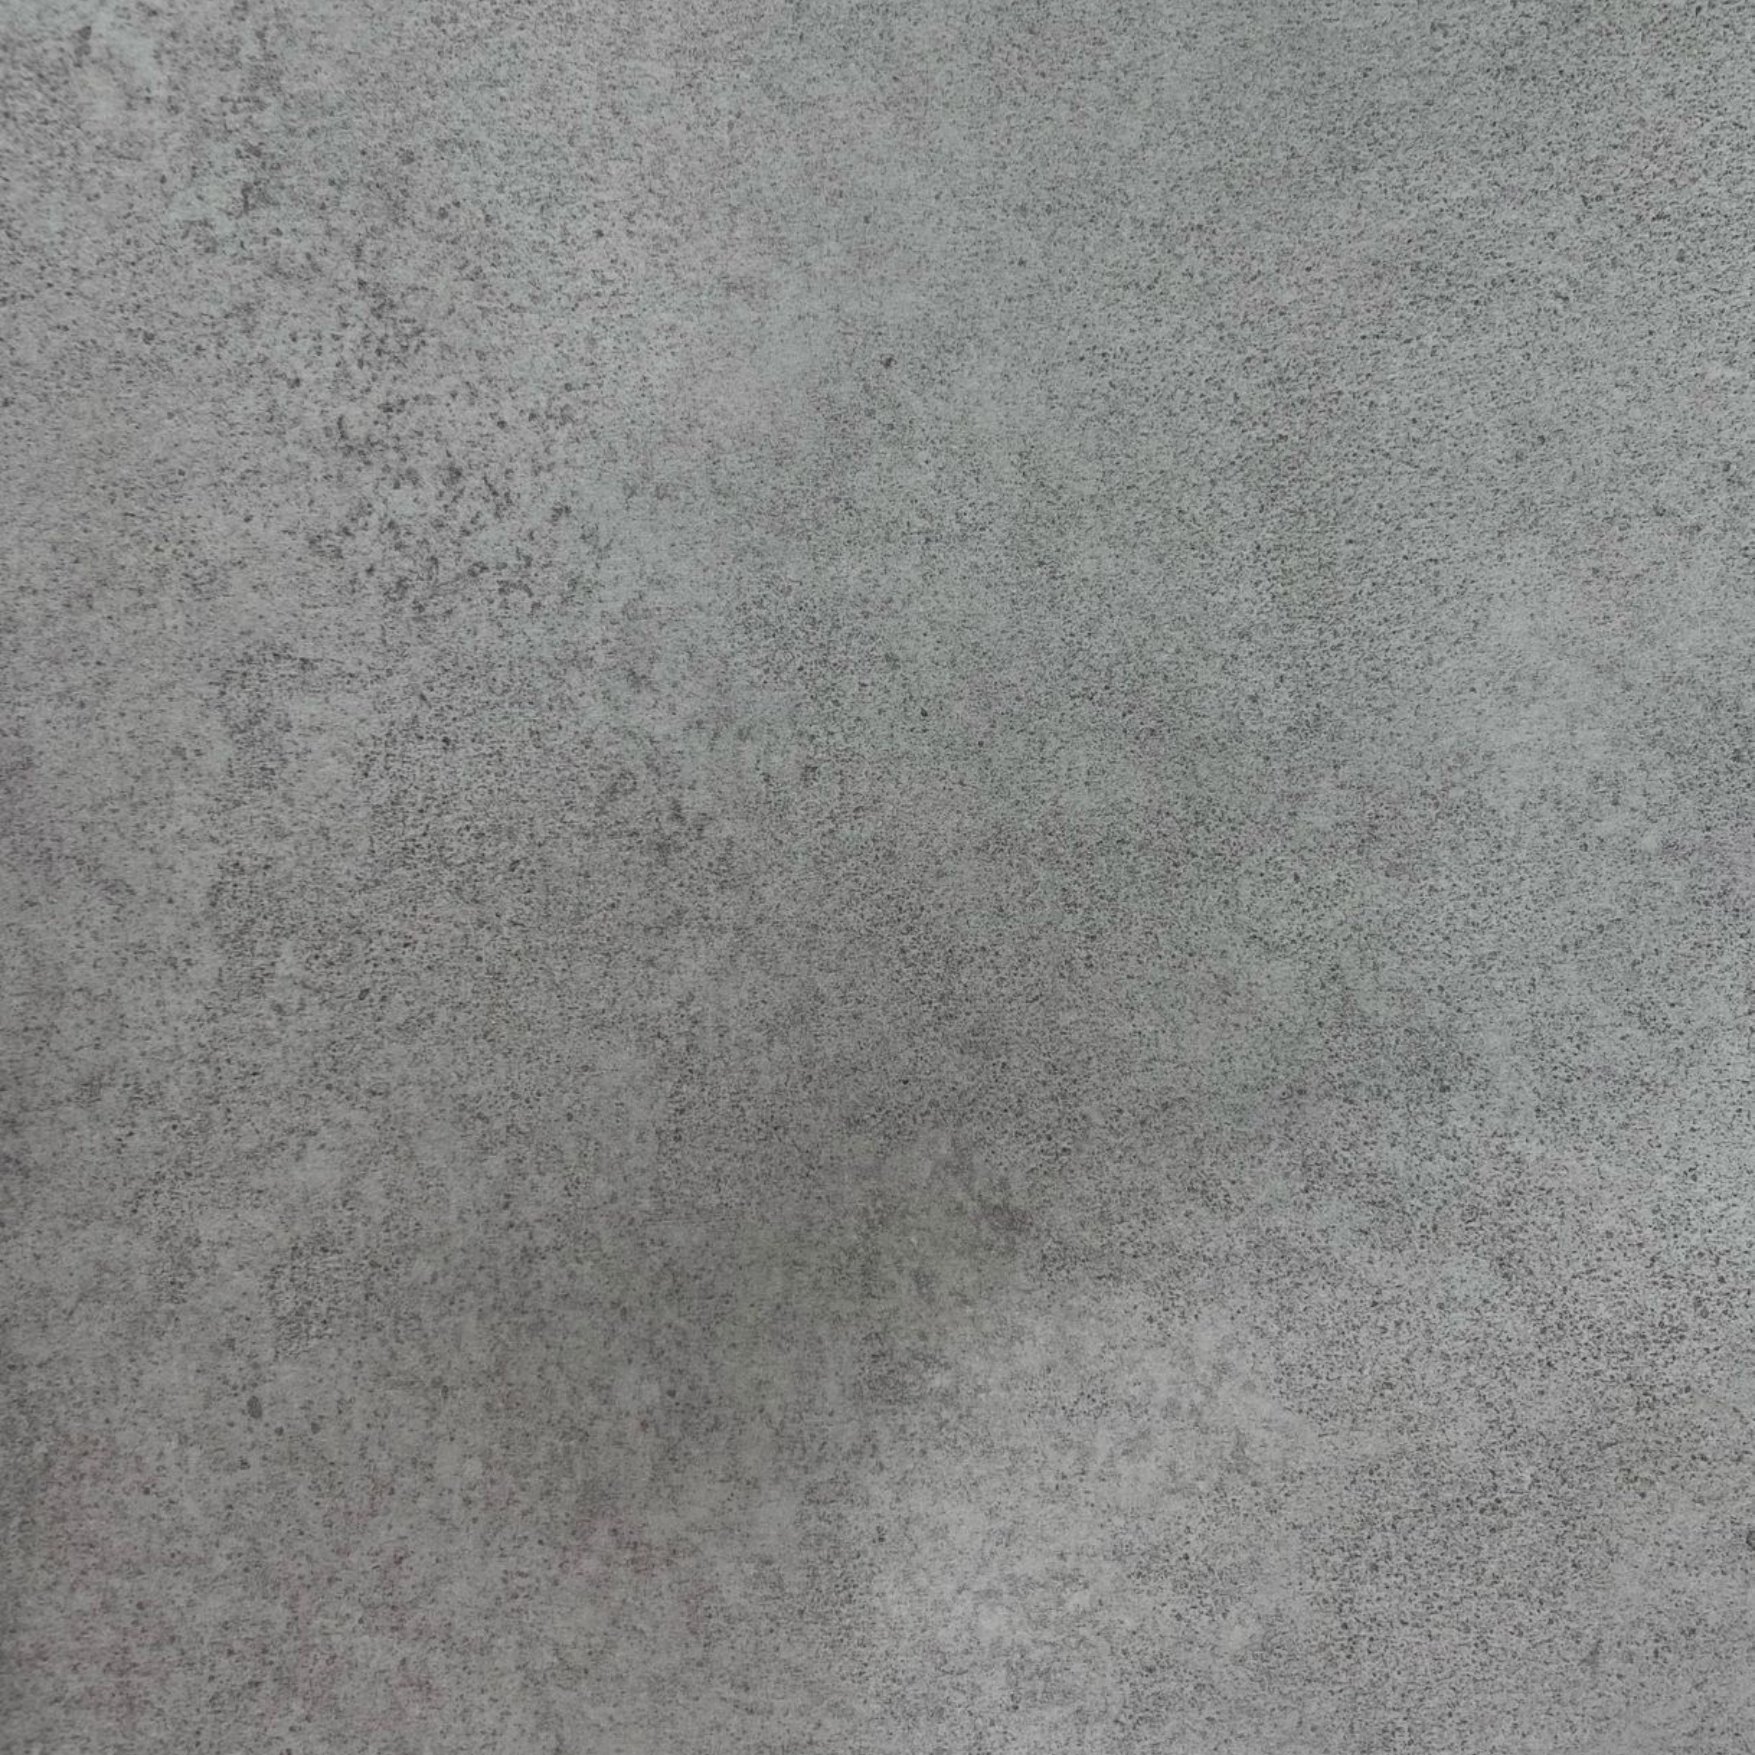 Piso Vinilico em Manta Liso Fosco, Antiderrapante, Pvc, 0,70mm 6m²  Cimento Rustico - 5